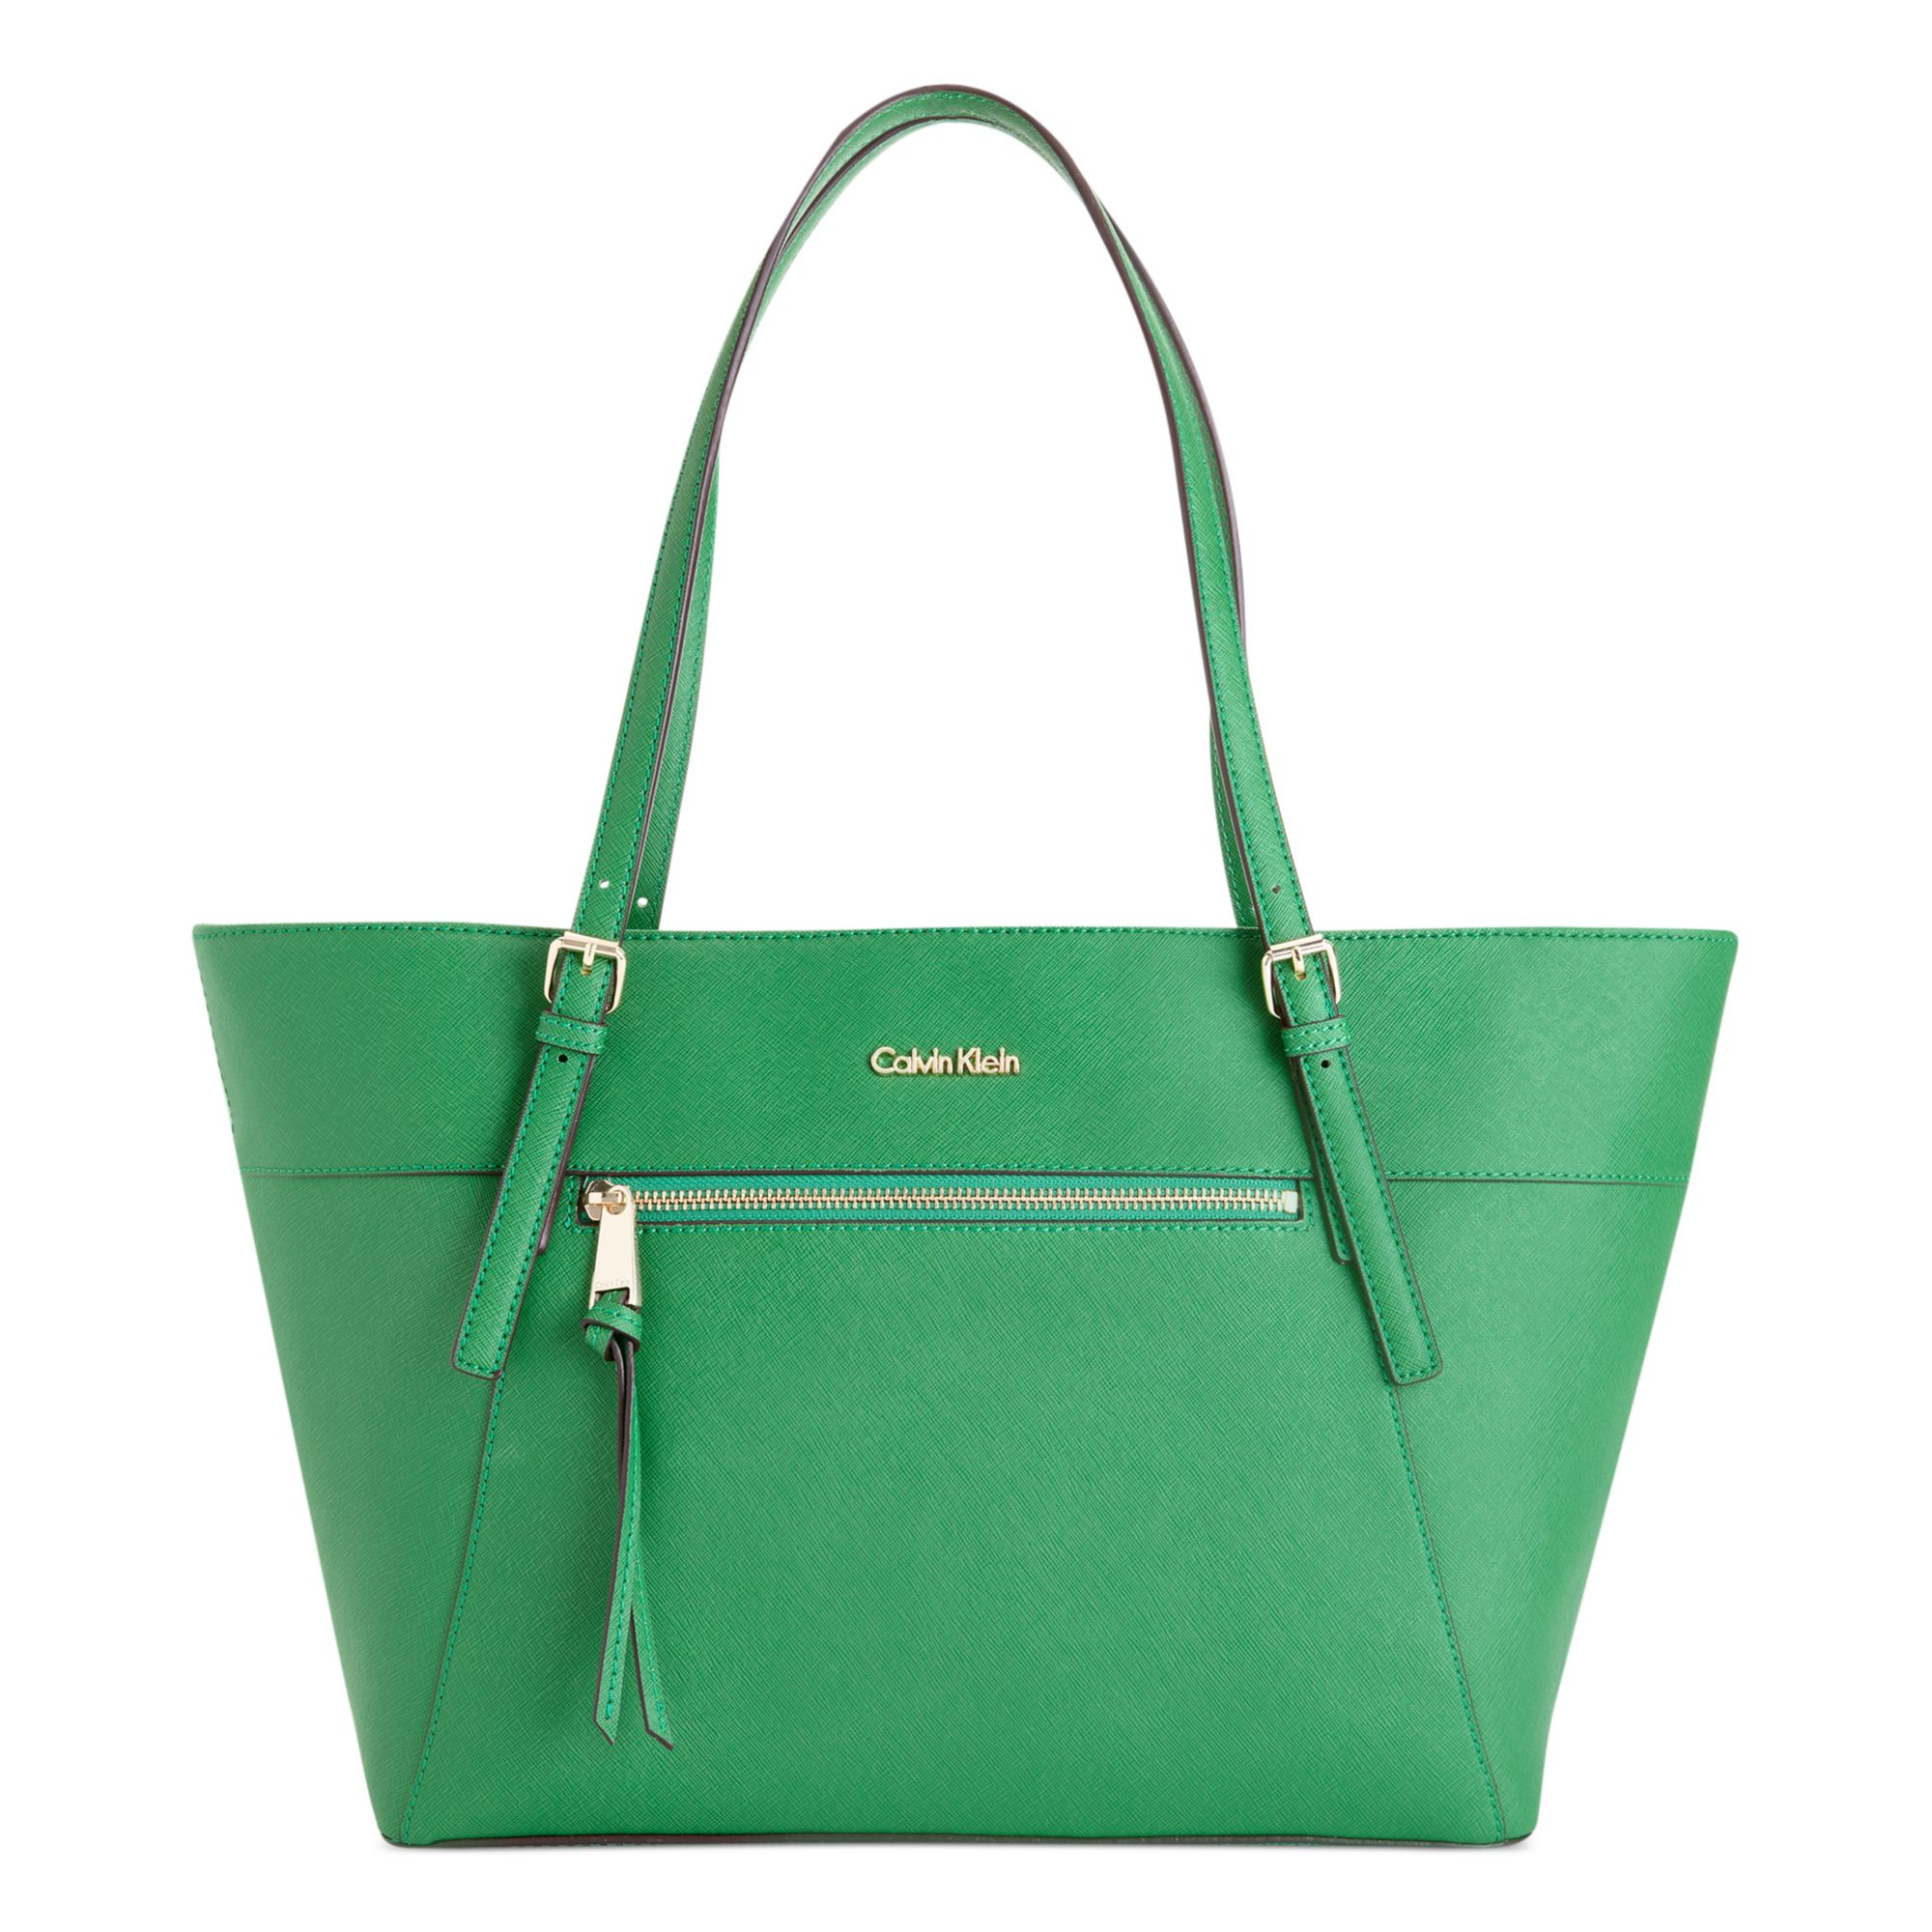 Lyst - Calvin Klein Key Items Saffiano Tote in Green